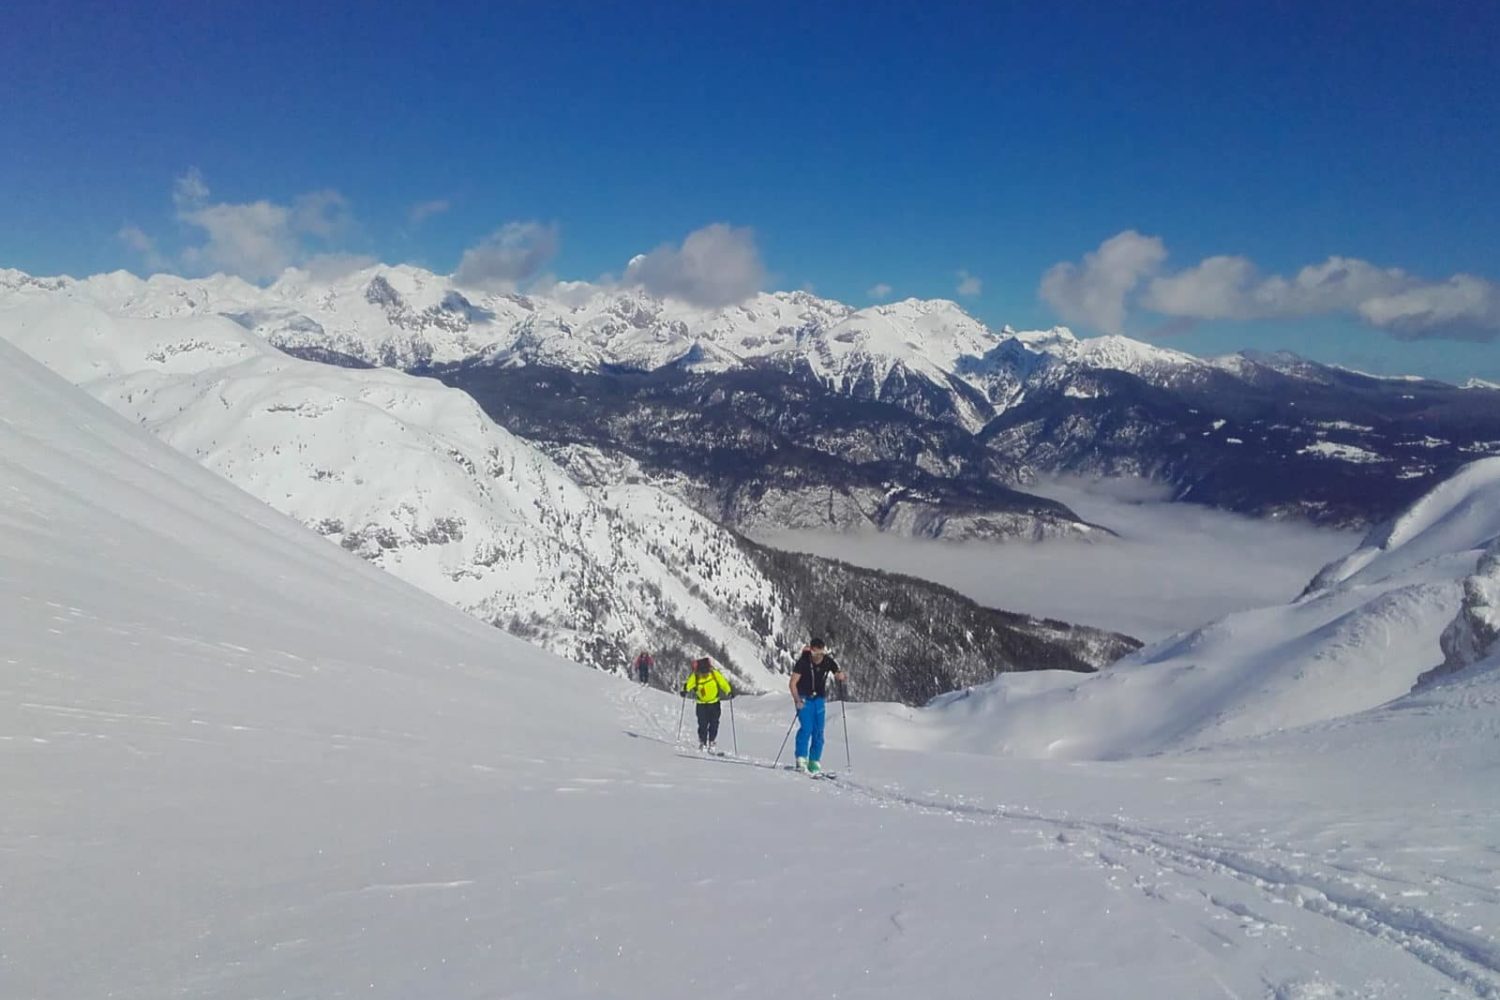 Ski touring in Slovenian Alps